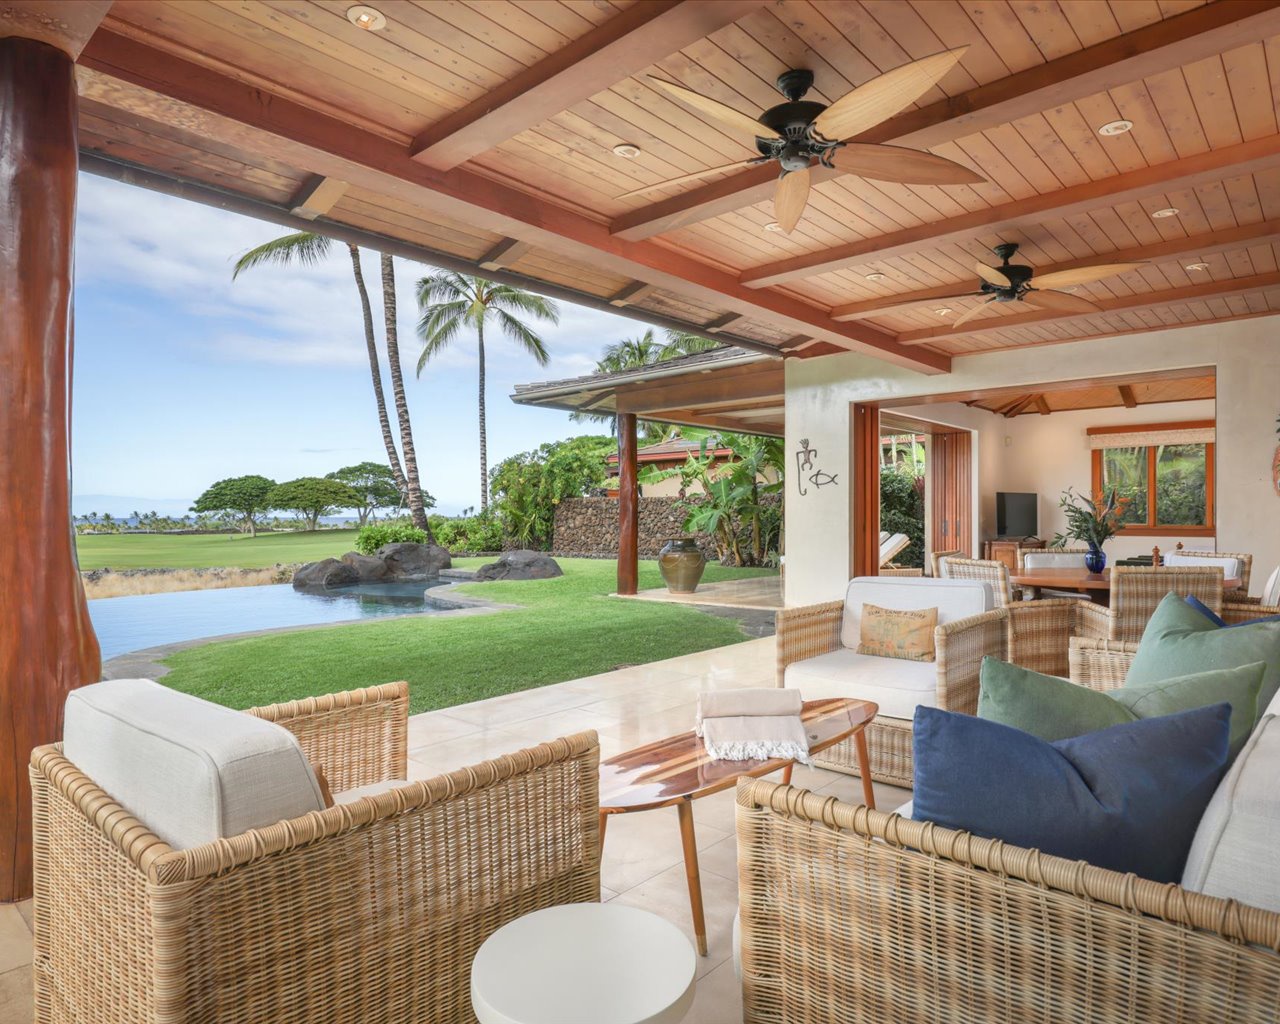 Kailua Kona Vacation Rentals, 3BD Pakui Street (131) Estate Home at Four Seasons Resort at Hualalai - The spacious, covered lanai offers plush seating with horizon views